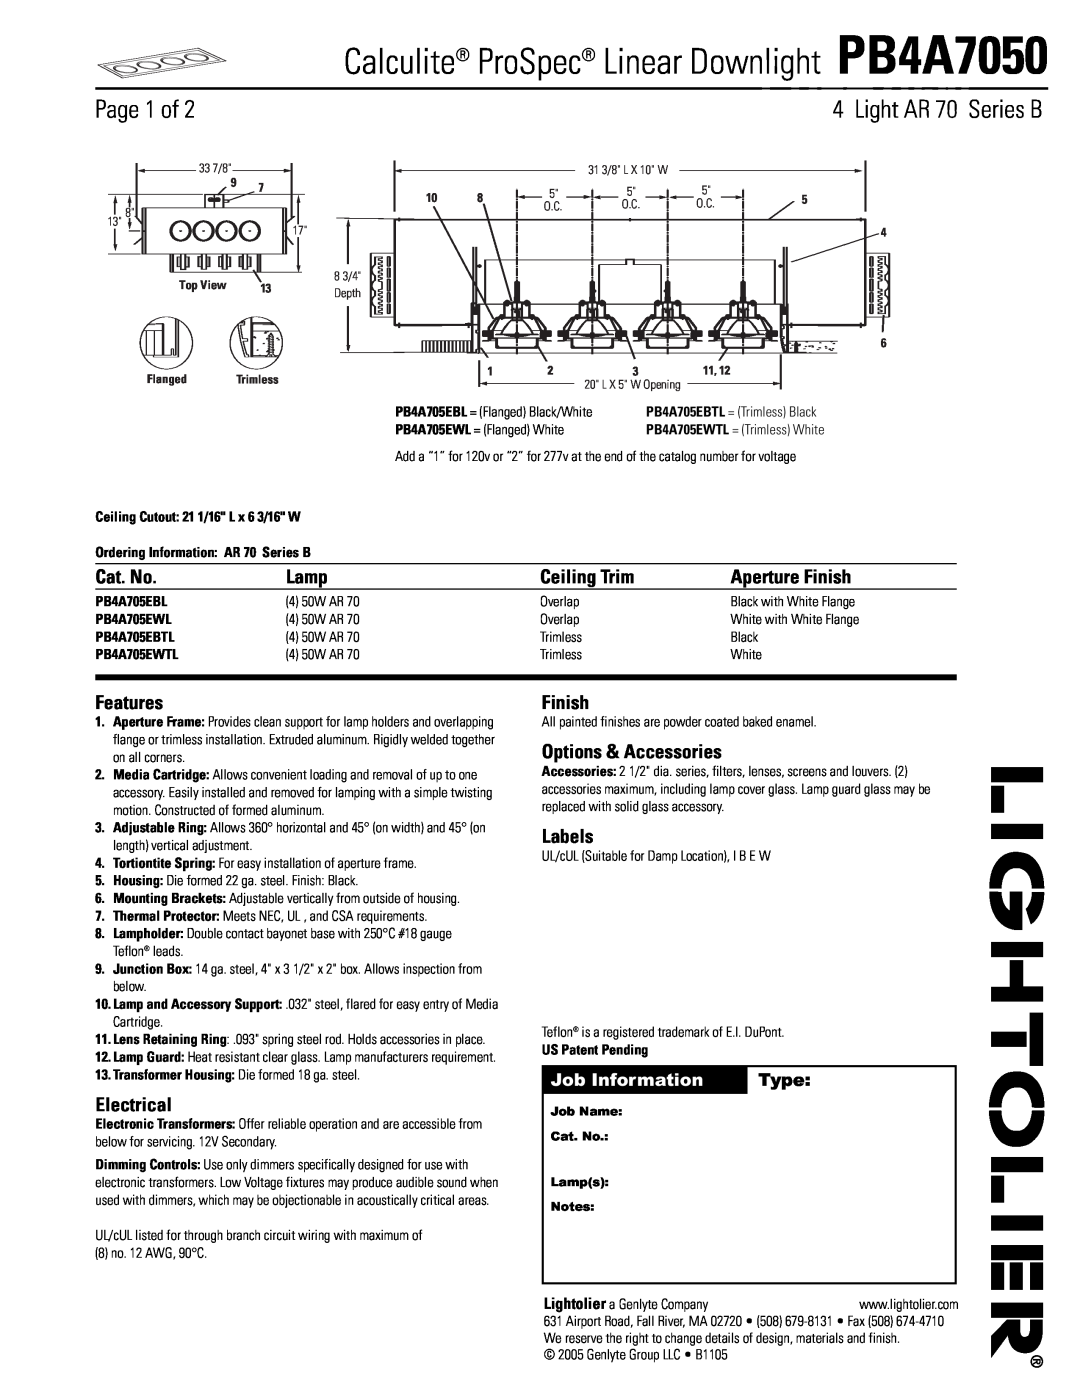 Lightolier manual Page 1 of, Type, Job Information, Calculite ProSpec Linear Downlight PB4A7050, Light AR 70 Series B 